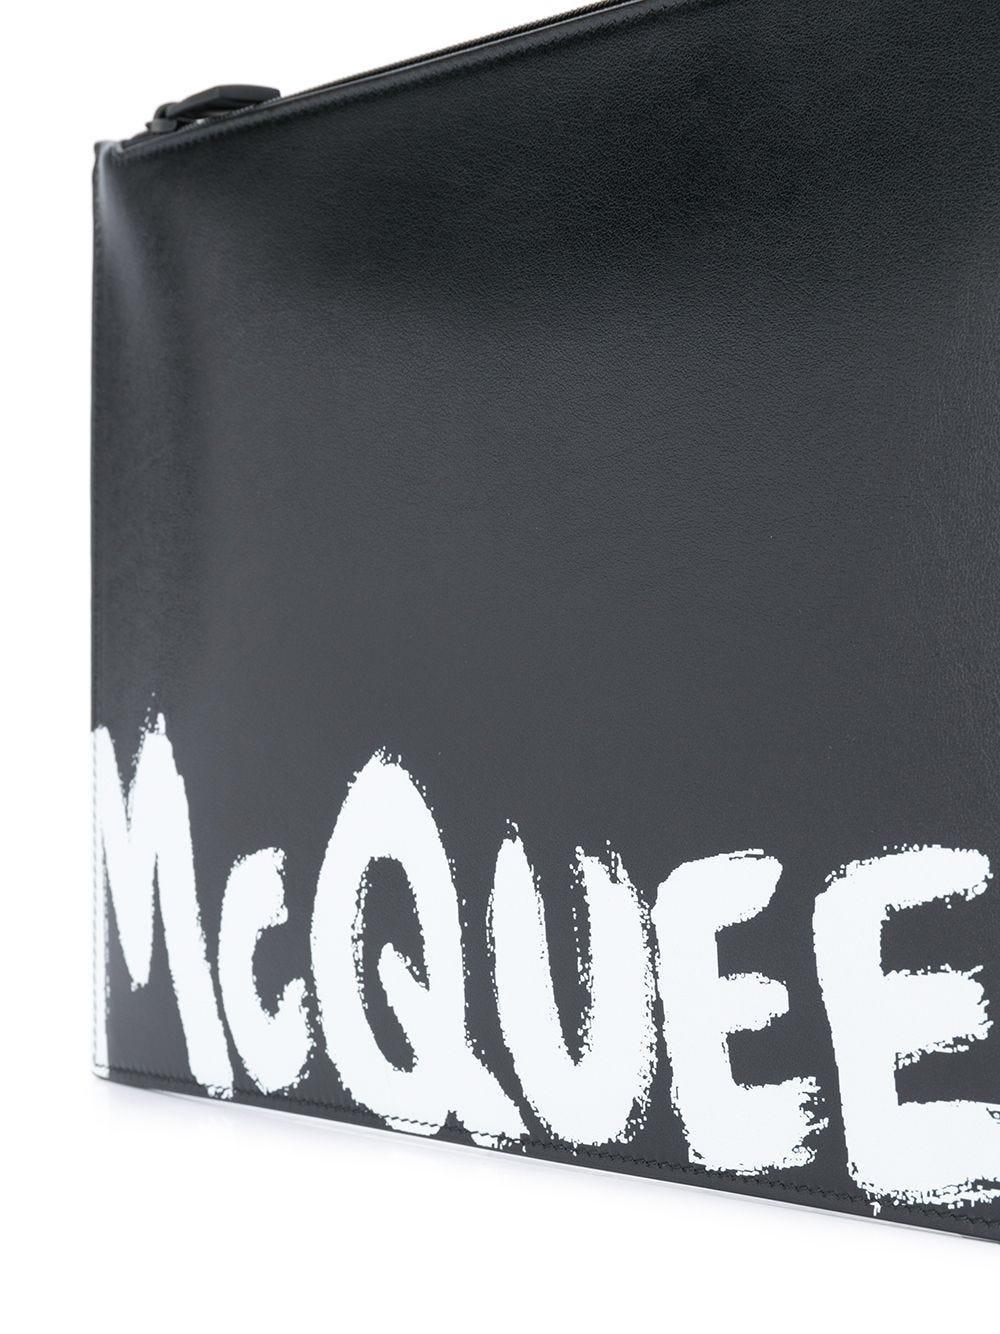 Alexander McQueen Mcqueen Graffiti Leather Pouch in Black for Men - Lyst